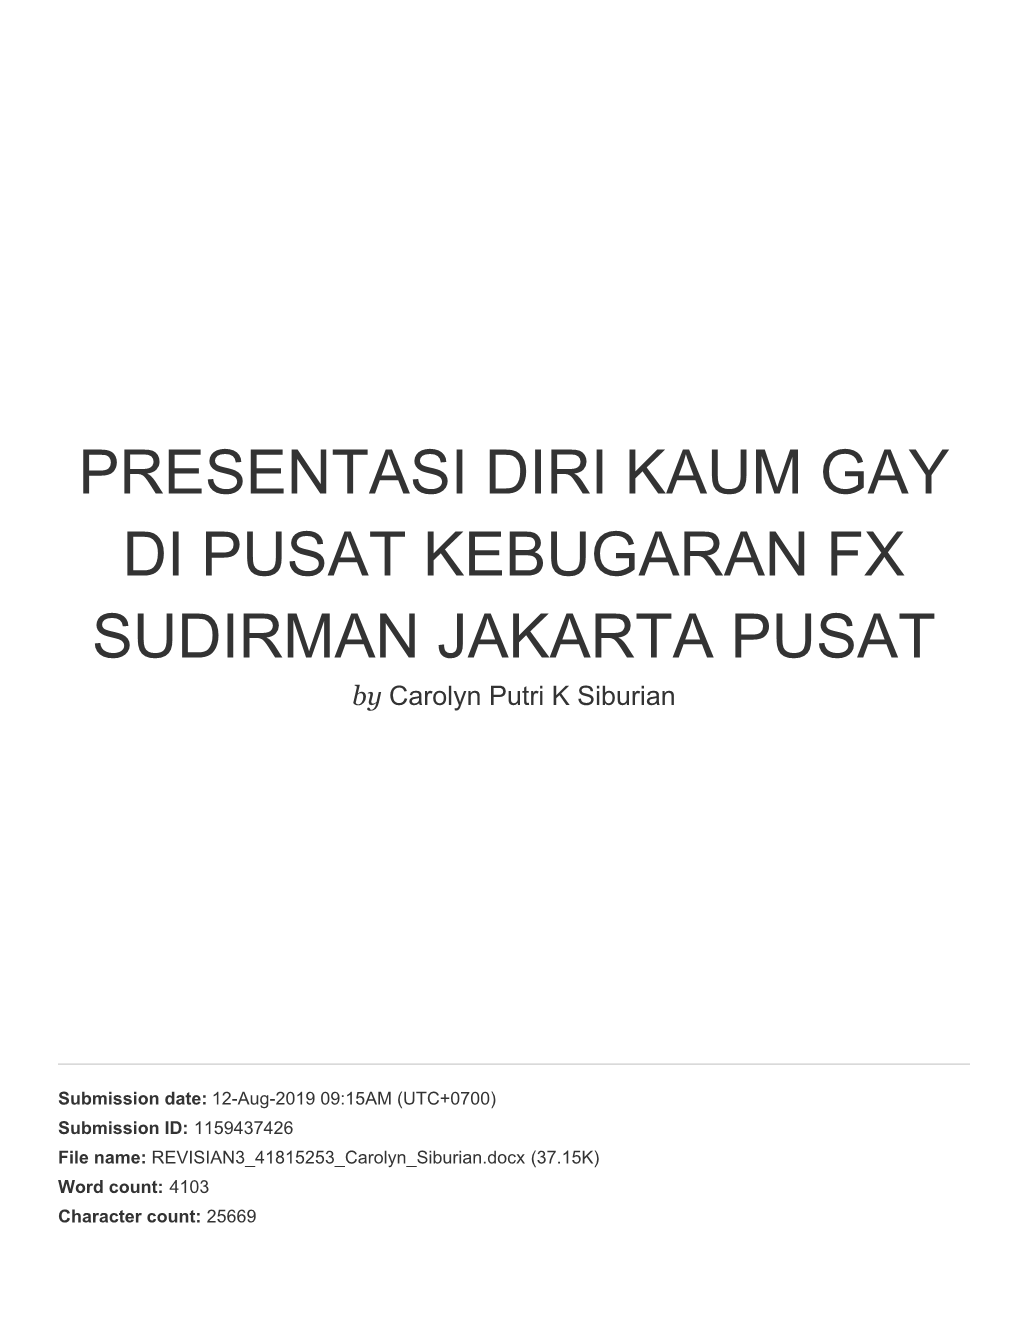 PRESENTASI DIRI KAUM GAY DI PUSAT KEBUGARAN FX SUDIRMAN JAKARTA PUSAT by Carolyn Putri K Siburian